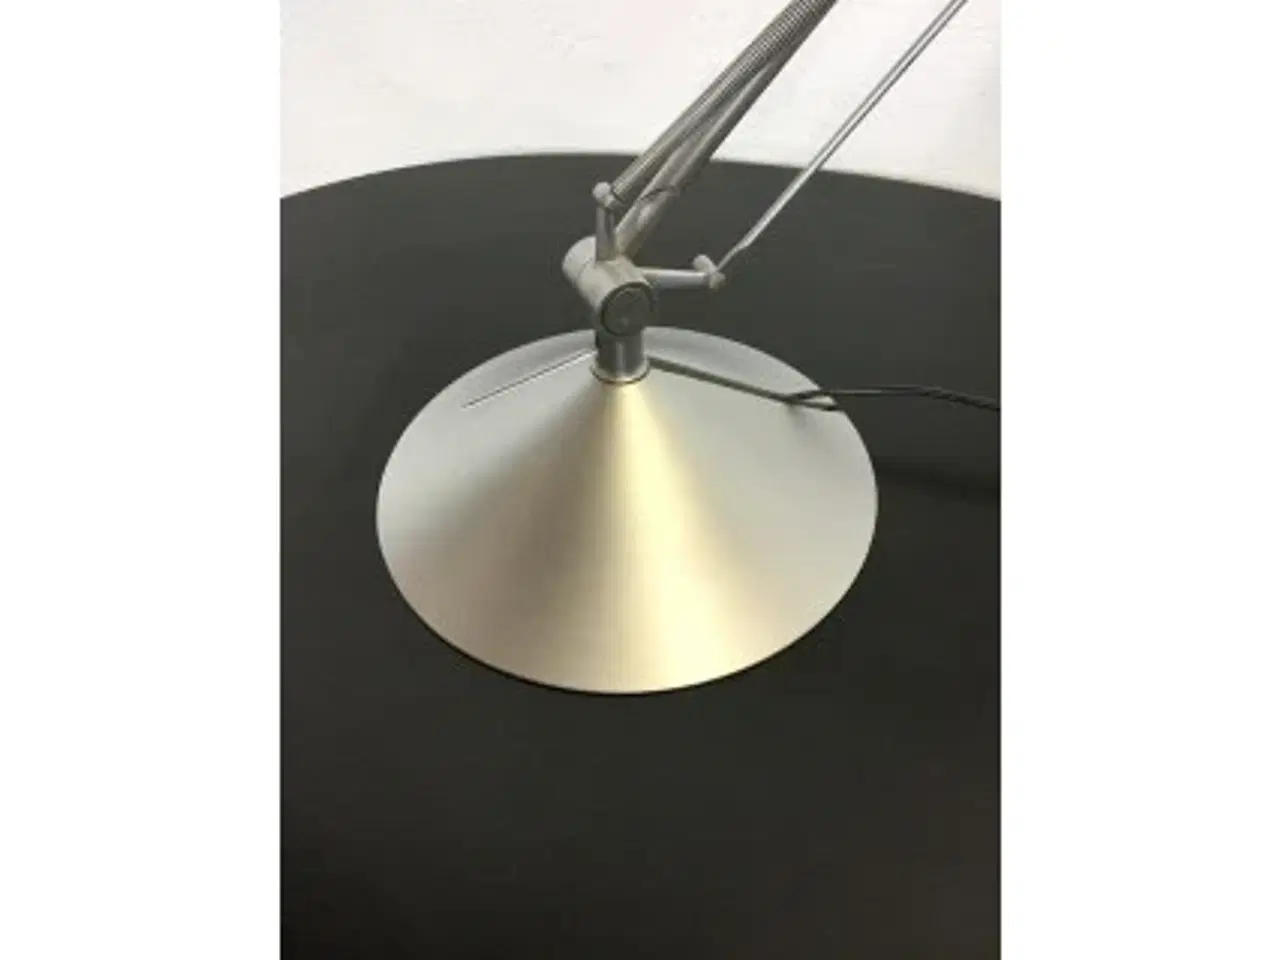 Billede 2 - Bordlampe i grå med led og plast skærm.